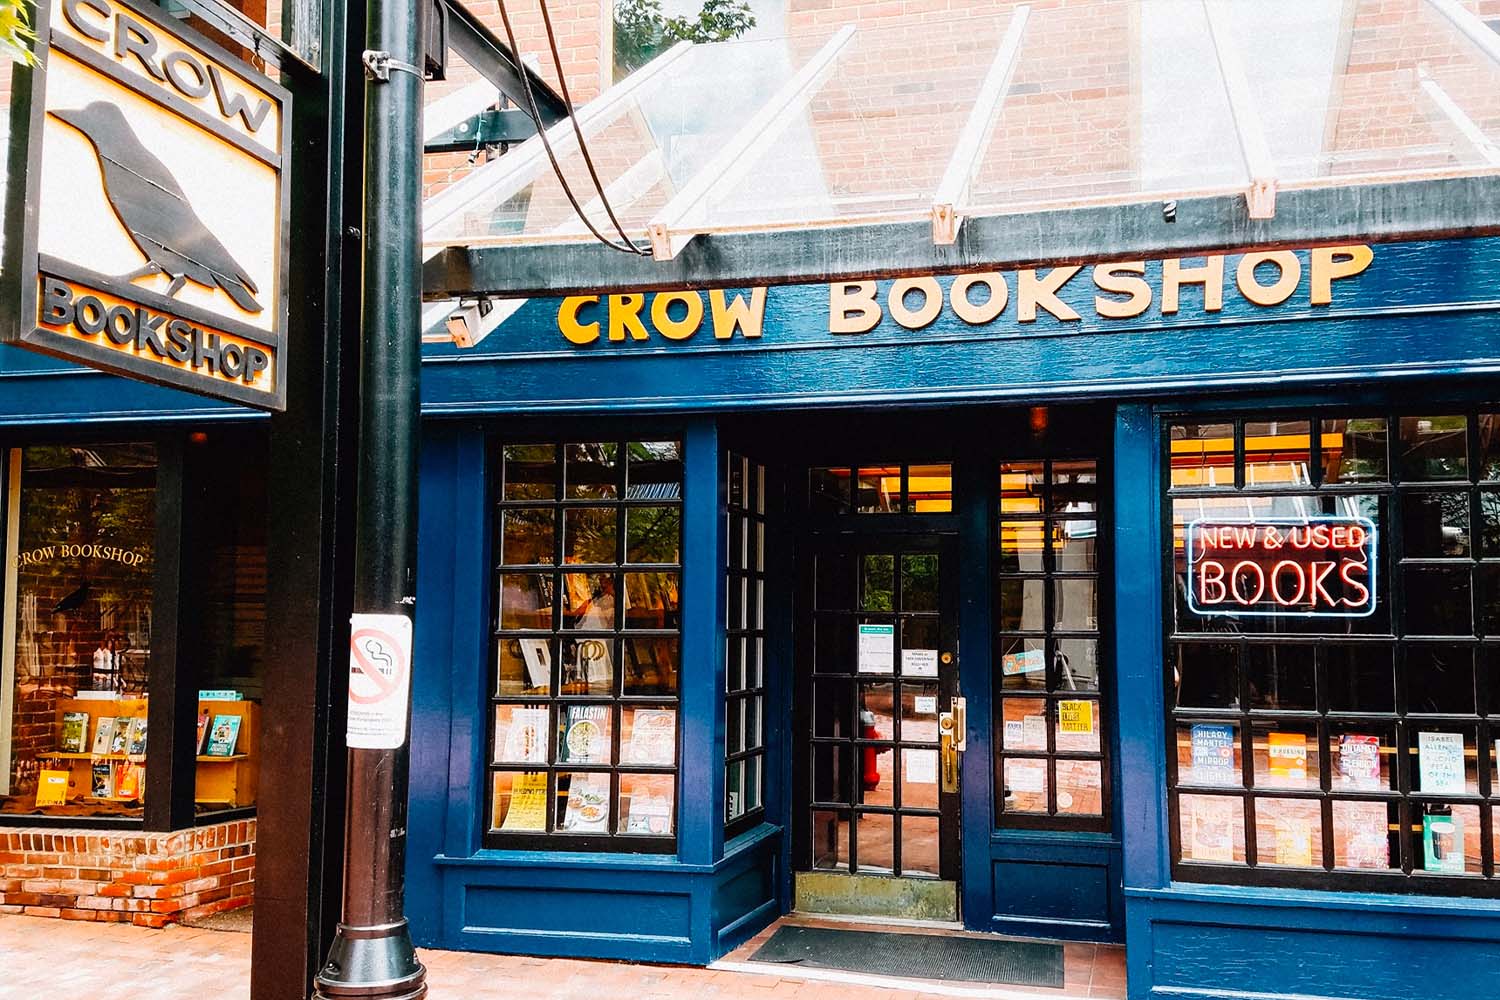 Crow Bookshop